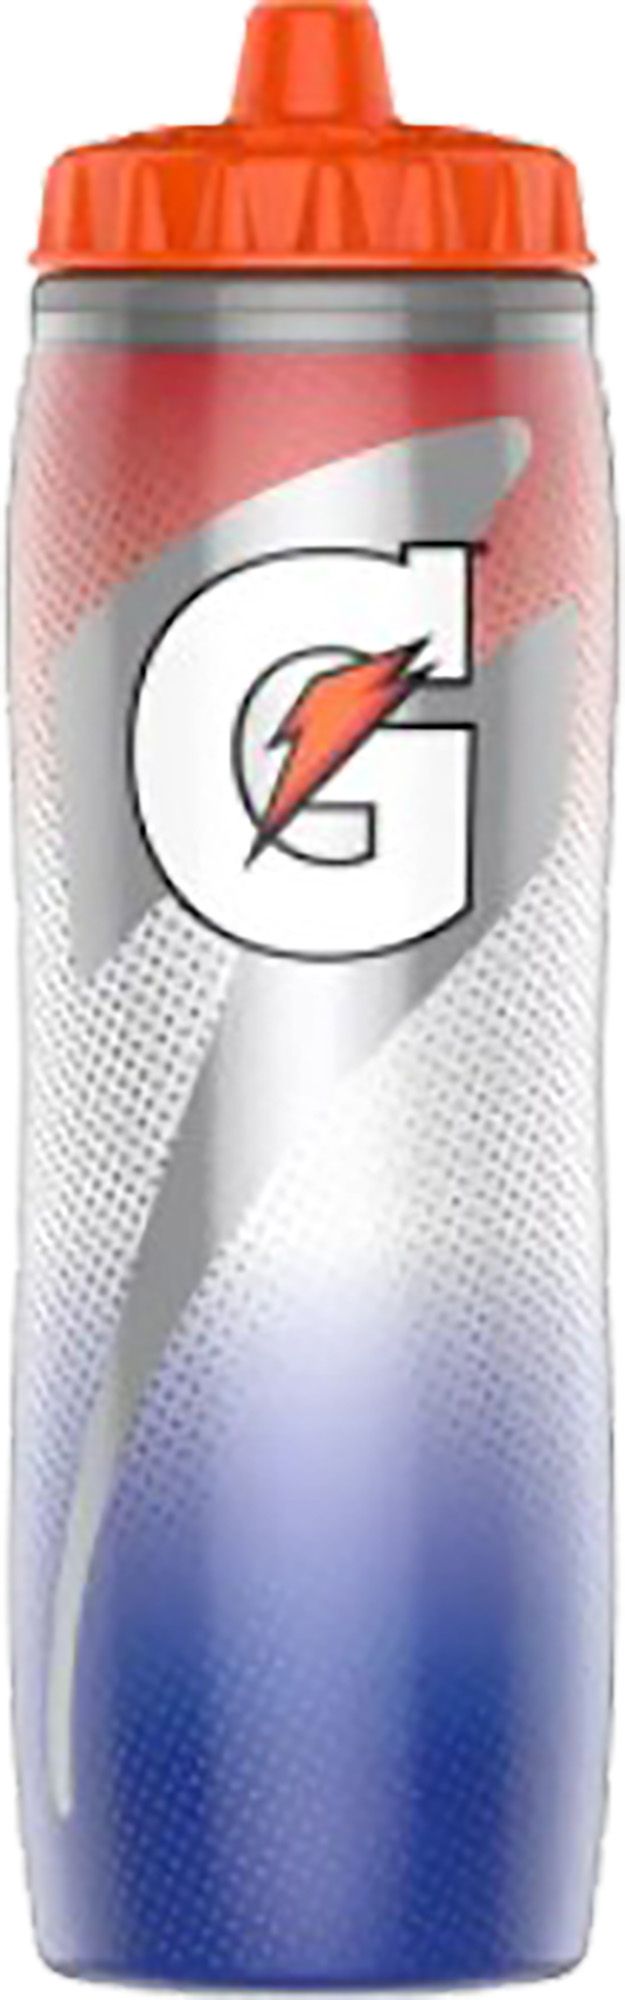 Gatorade Gx 30 oz. Stainless Steel Bottle